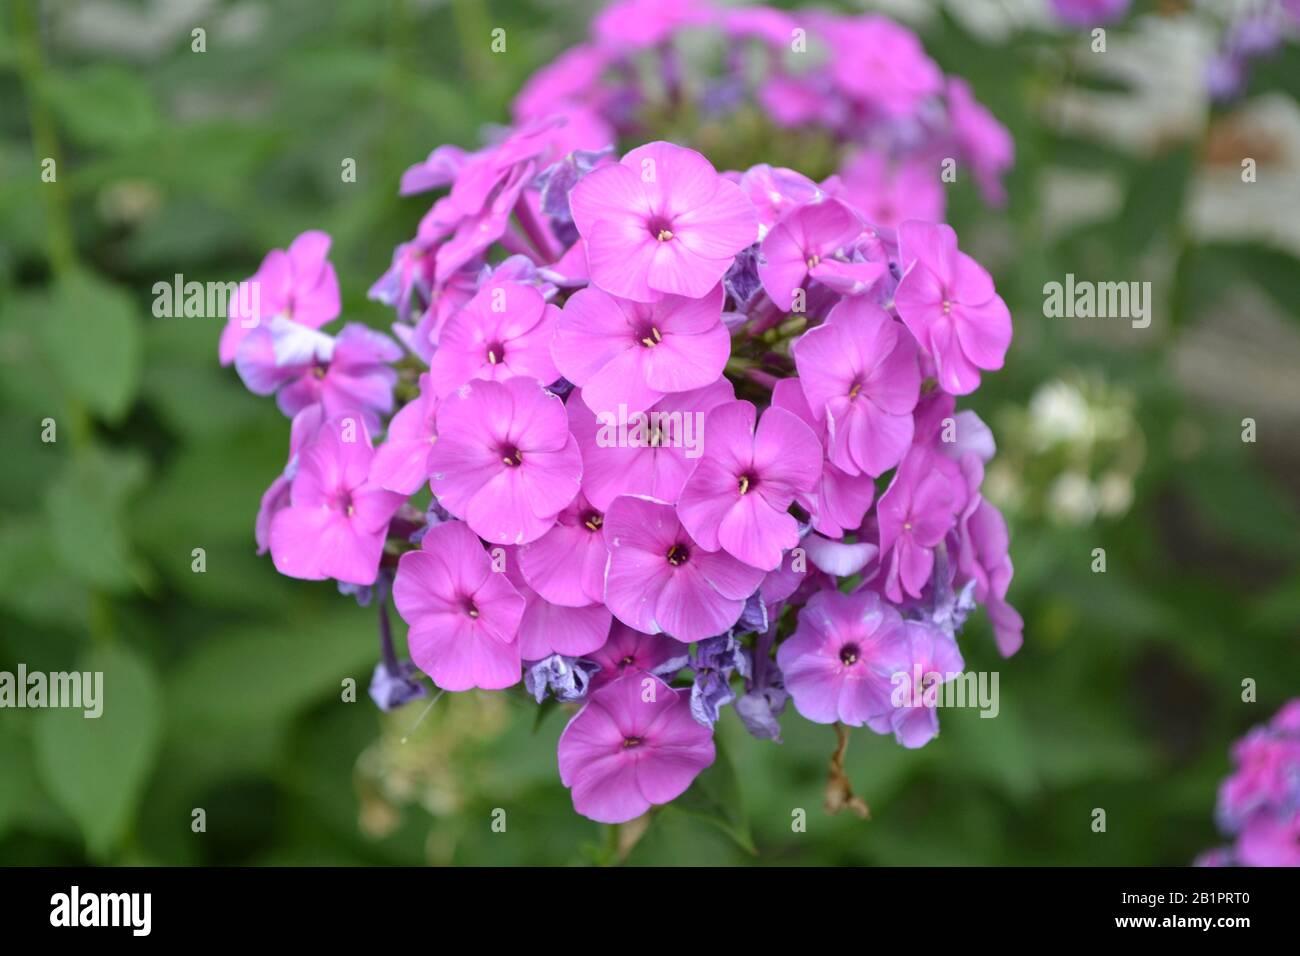 Phlox. Polemoniaceae. Growing flowers. Flowerbed. Garden. Floriculture. Violet inflorescence. Beautiful flowers. Green leaves. High bushes. Horizontal Stock Photo